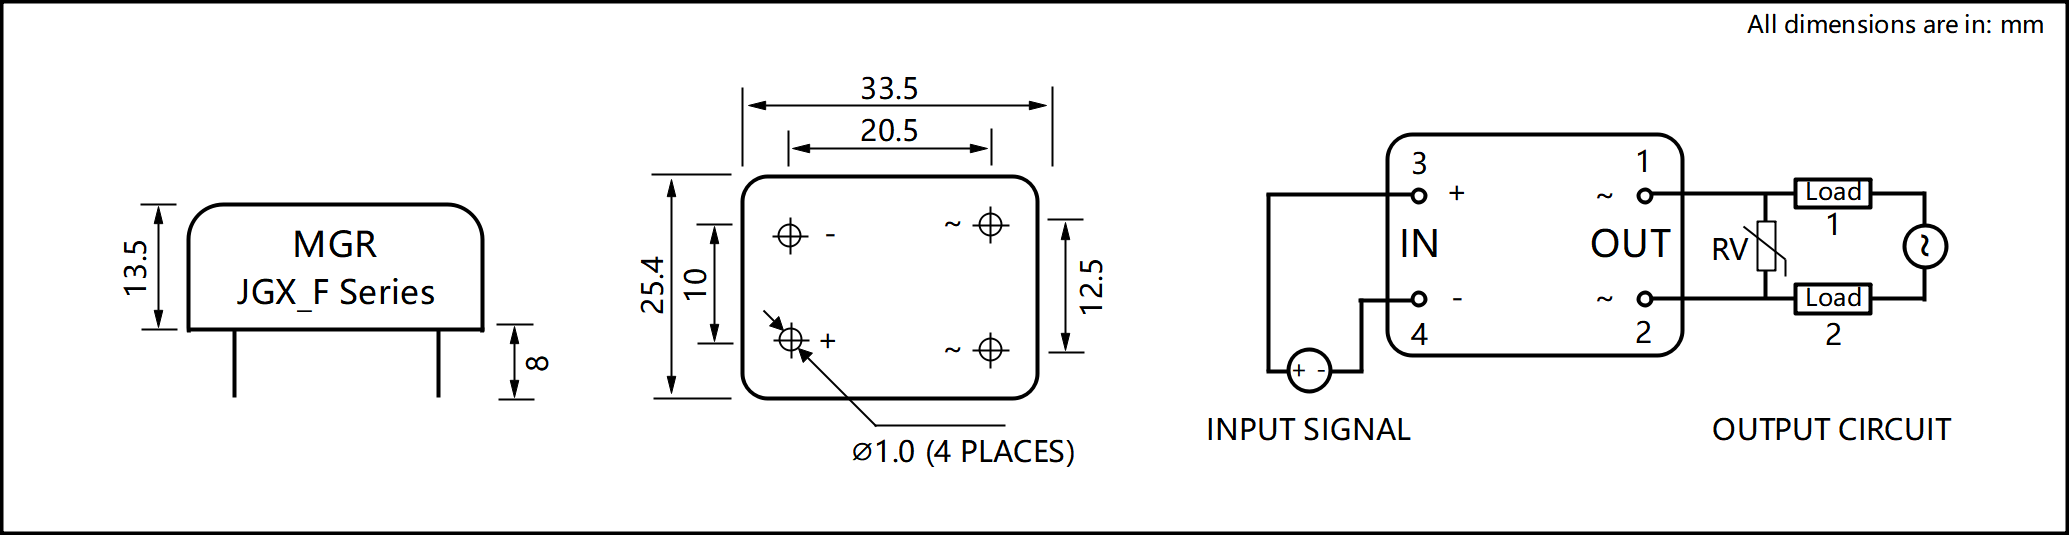 JGX_F Series Metal Housing PCB Mount Solid State Relay Circuit Wring Diagram